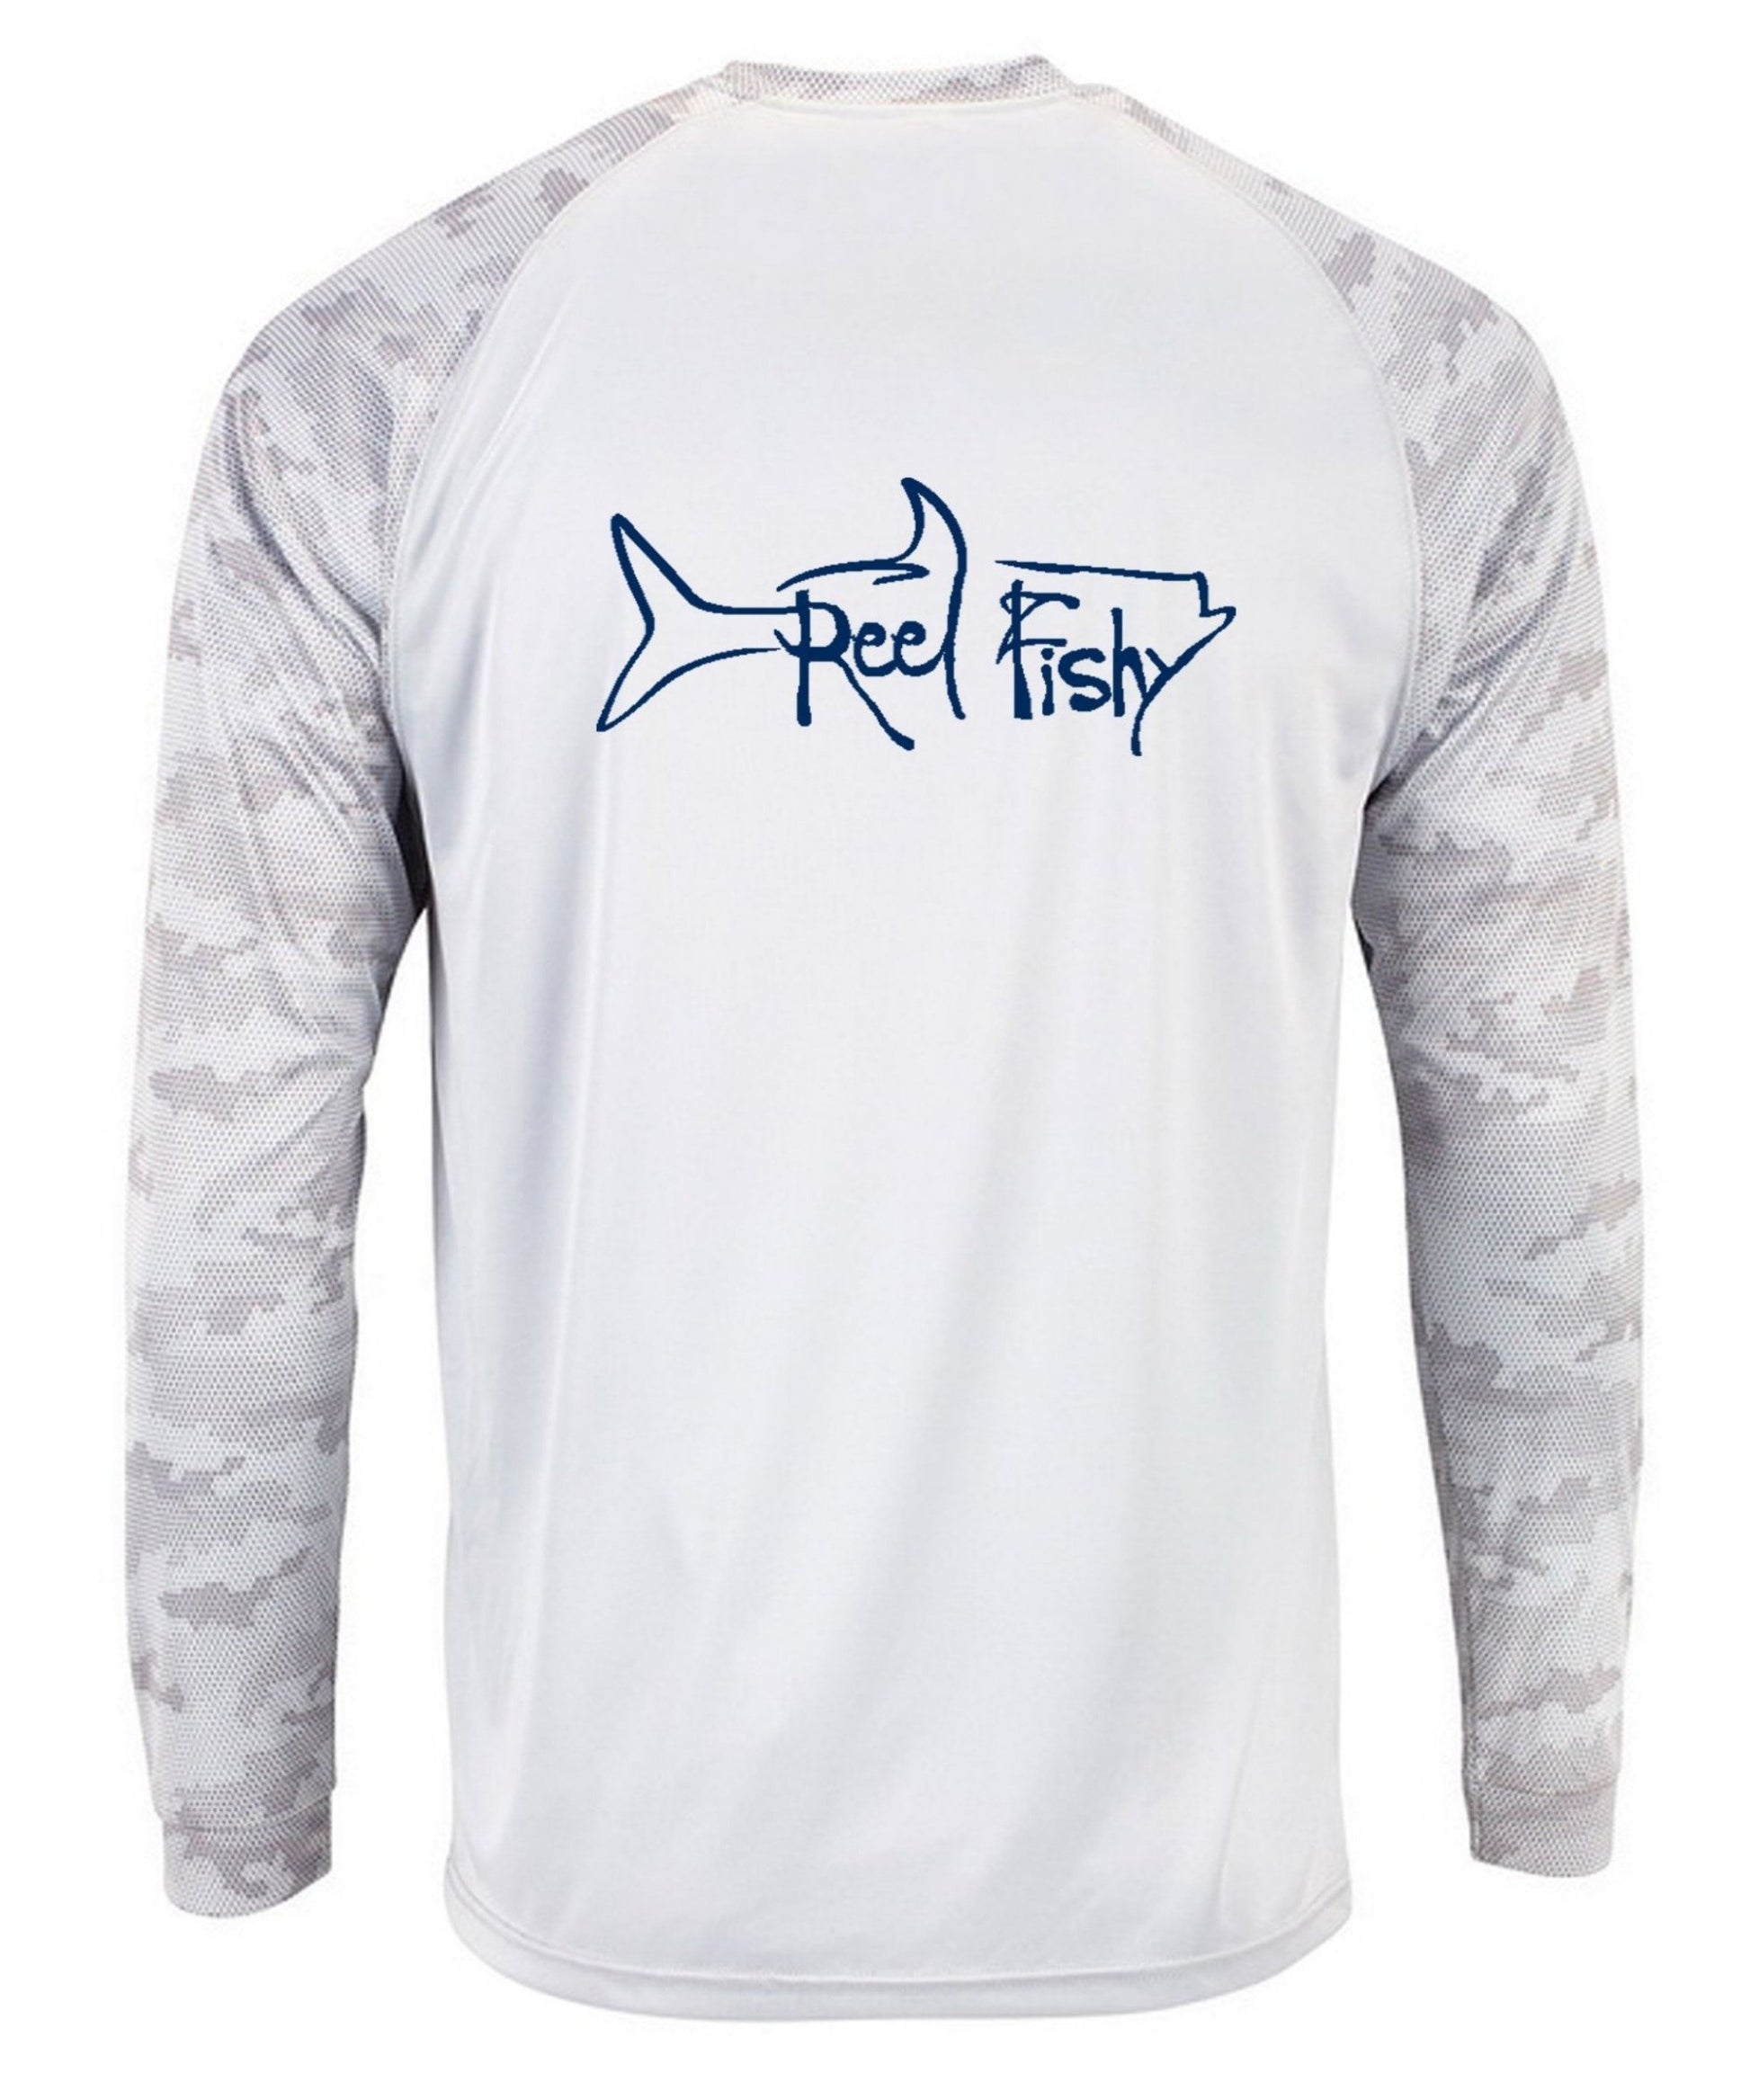 Youth Performance Dry-Fit Tarpon Fishing Shirts 50+UPF Sun